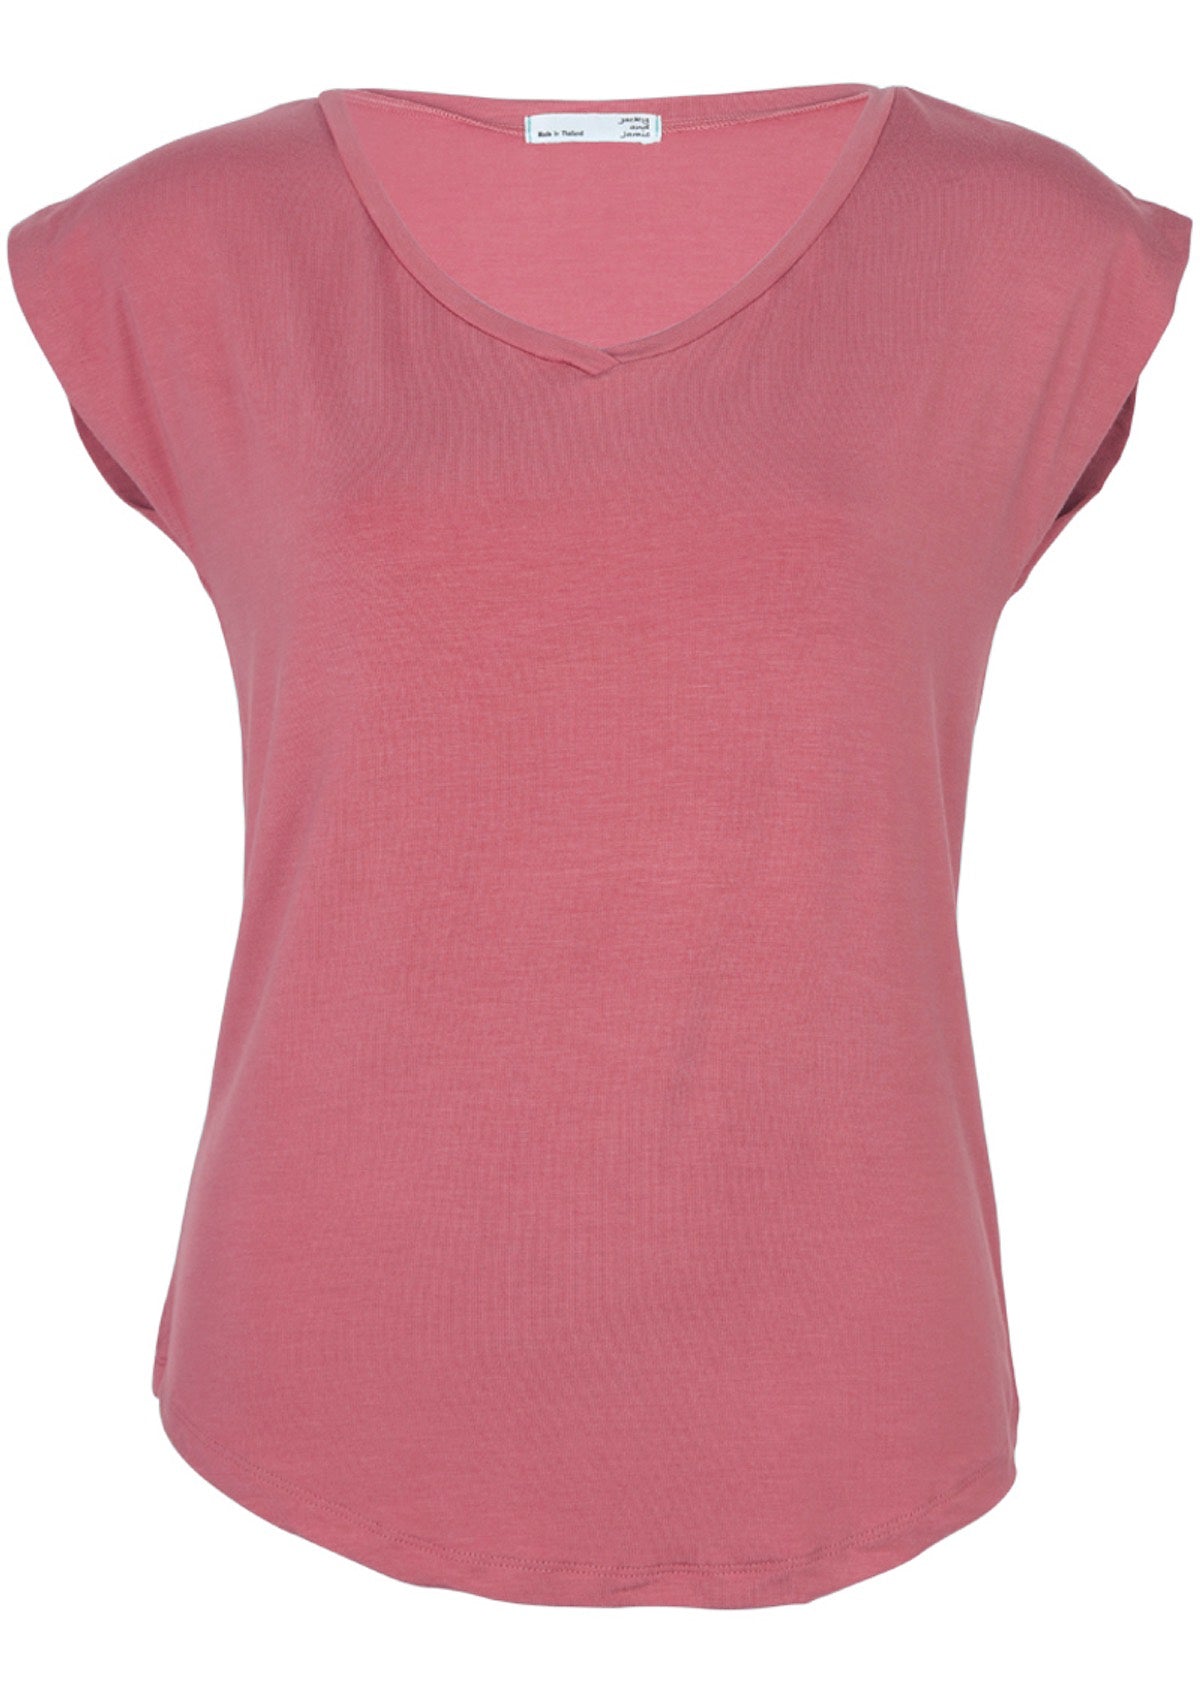 Women's pink v-neck short cap sleeve rayon top